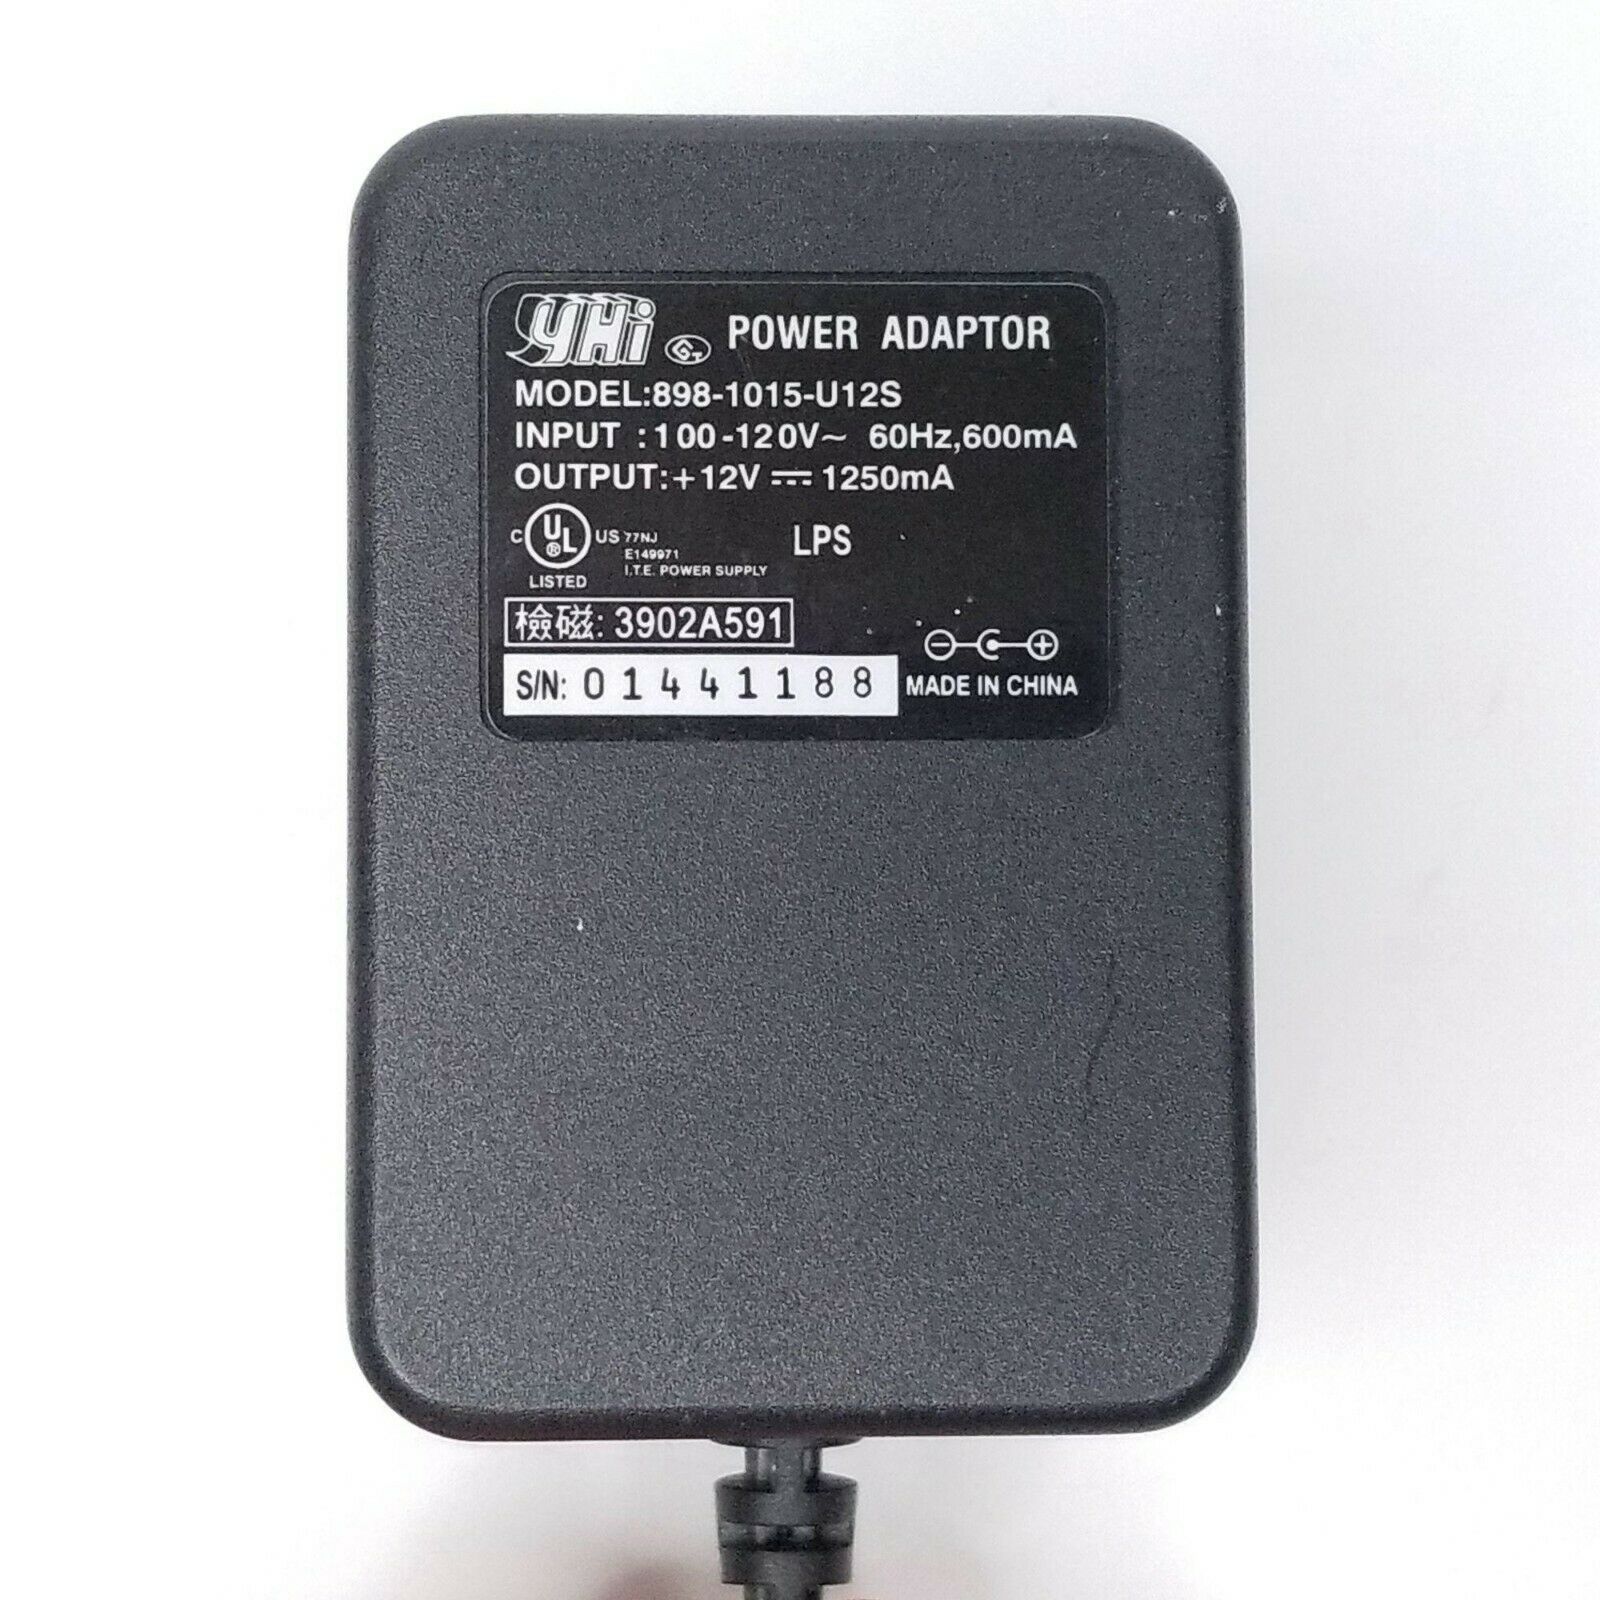 YHI Power Adaptor Model 898-1015-U12S 12V Compatible Brand: YHI Type: Power Supplies & Batteries Compatible Model: